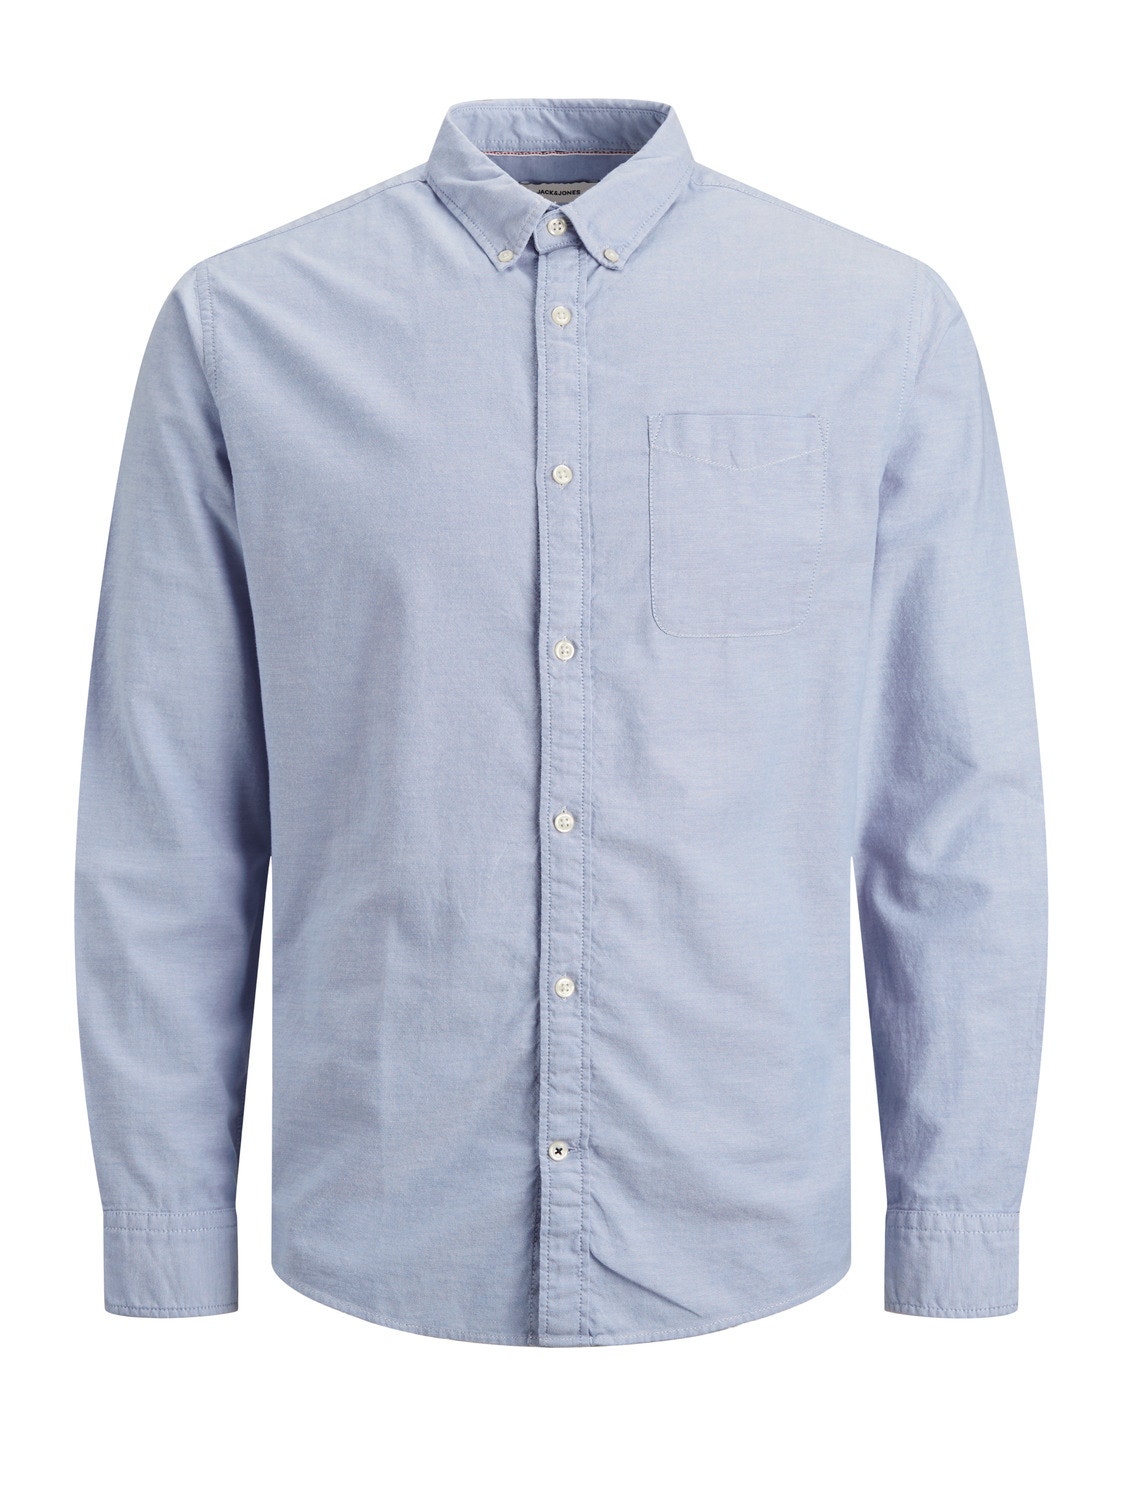 Jack & Jones Camisa Casual Slim Fit -Cashmere Blue - 12182486